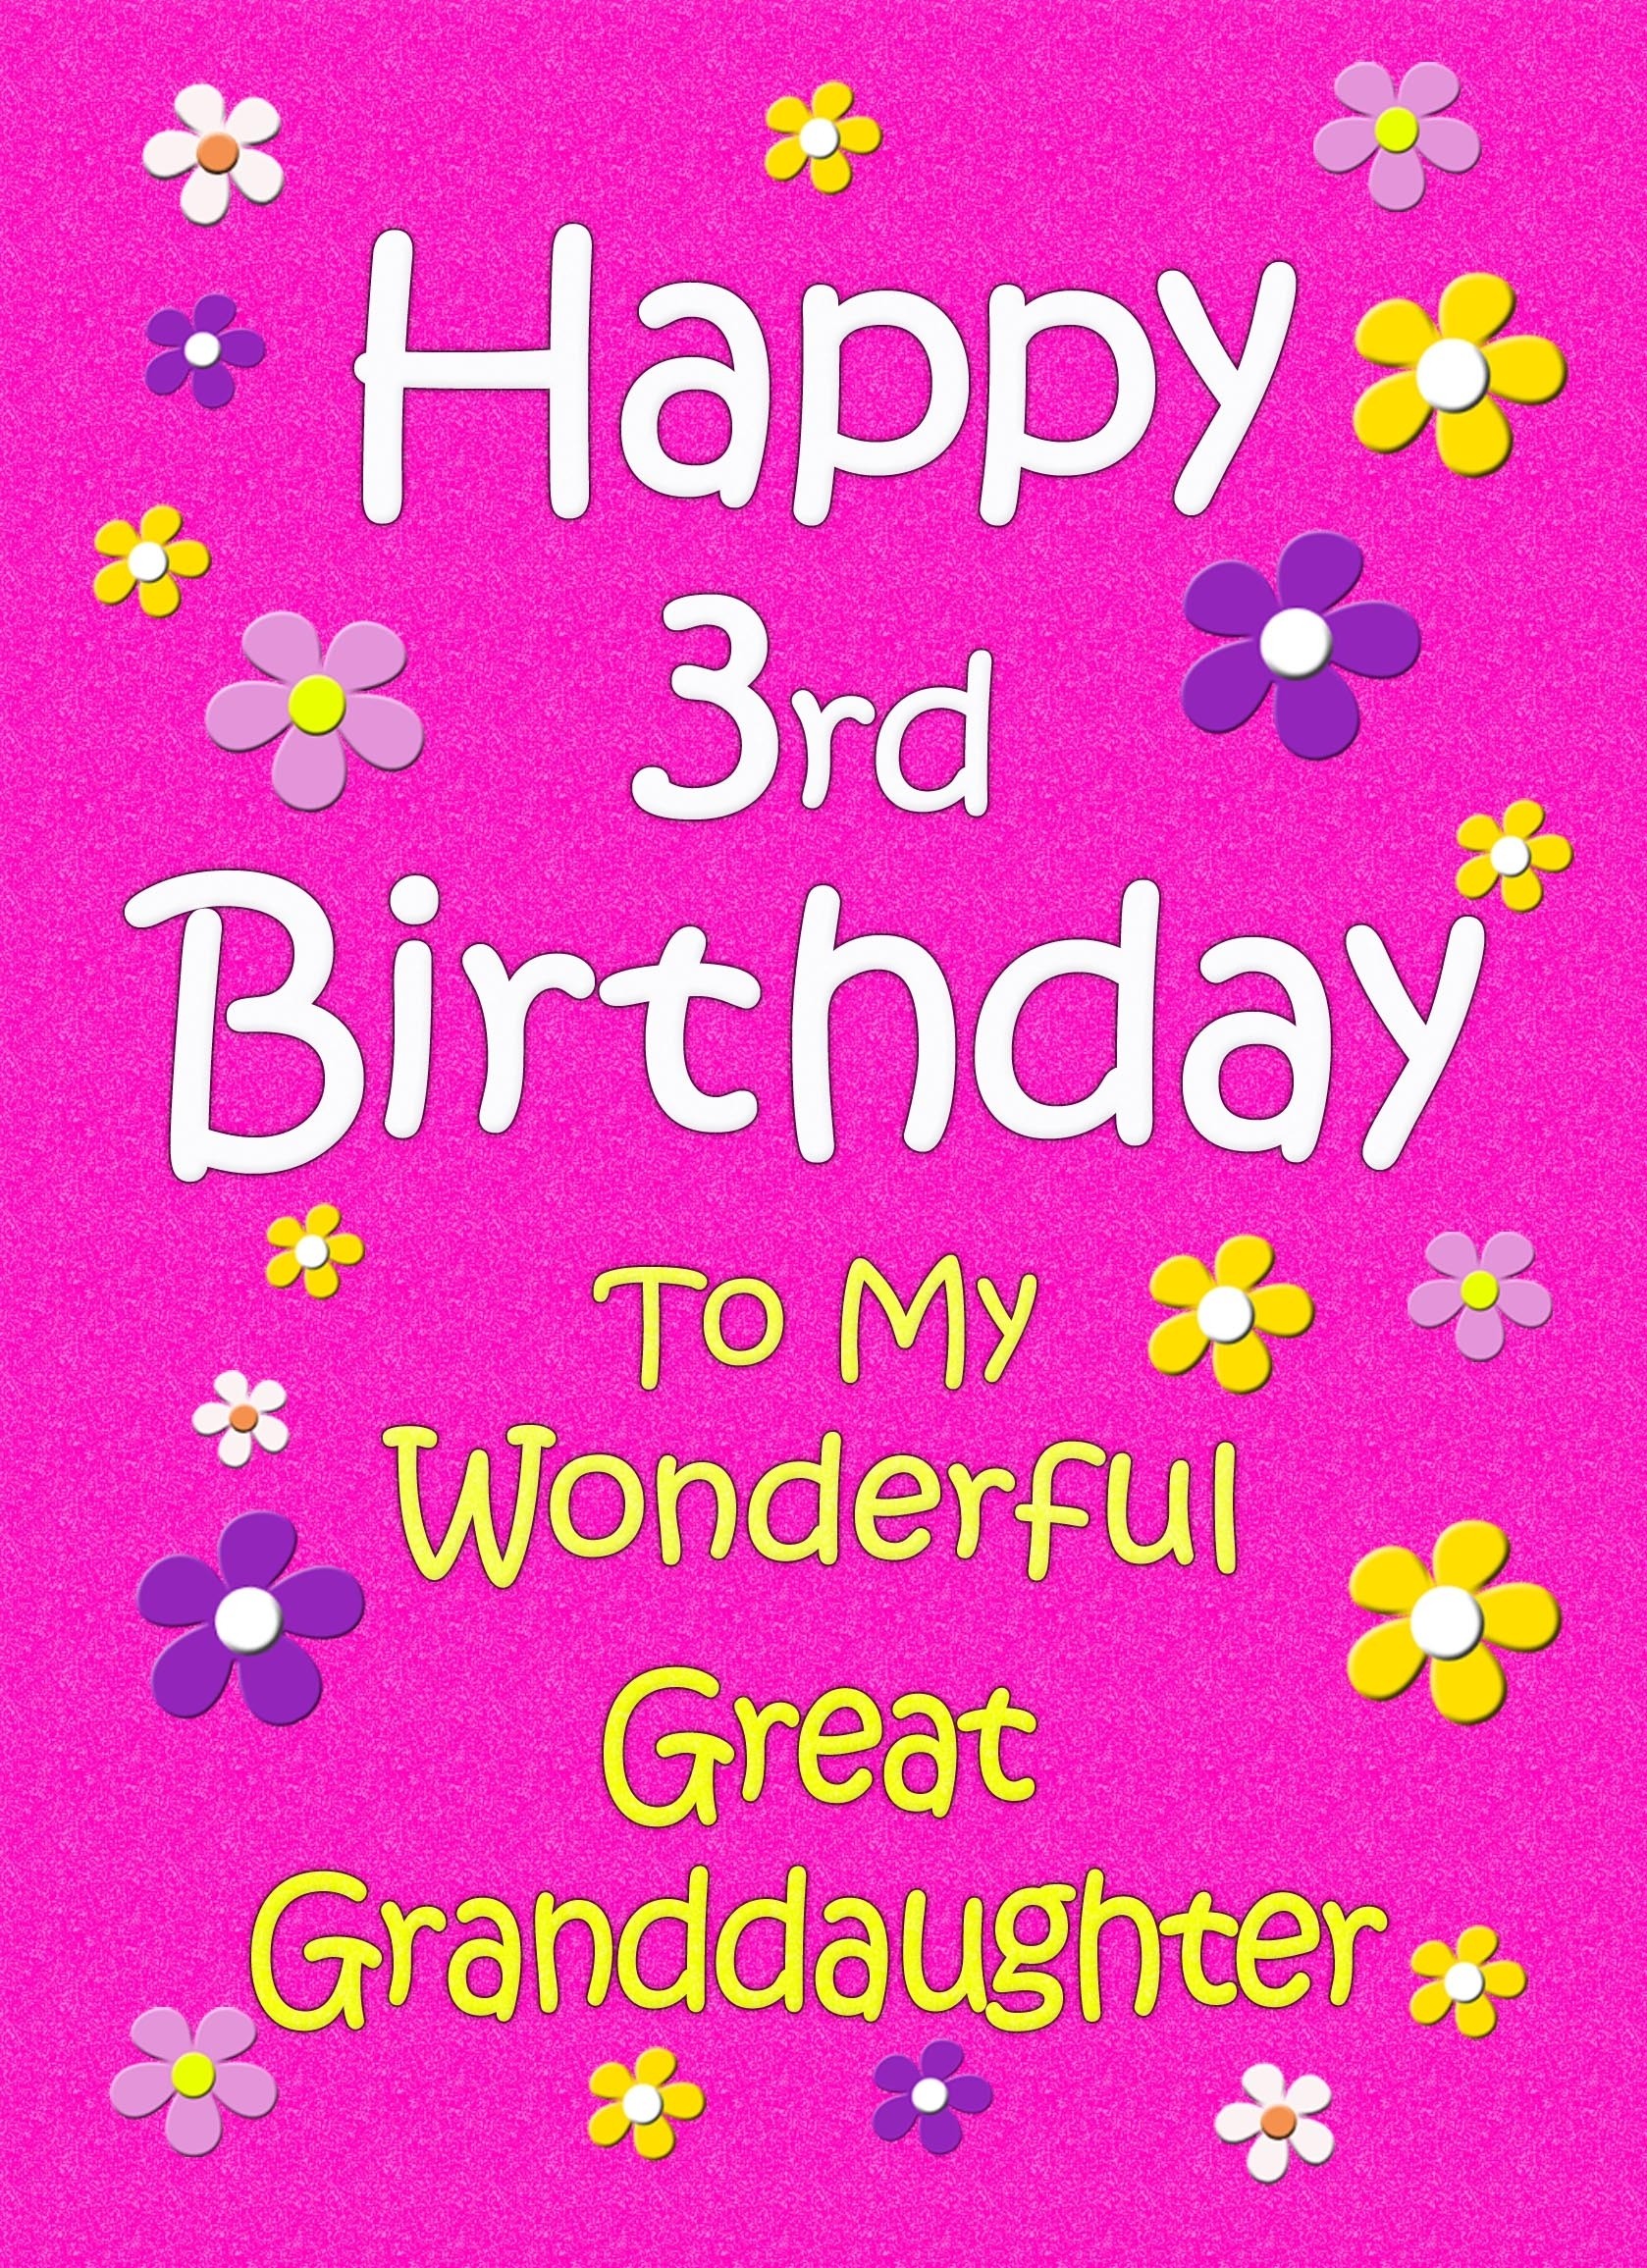 Great Granddaughter 3rd Birthday Card (Pink)